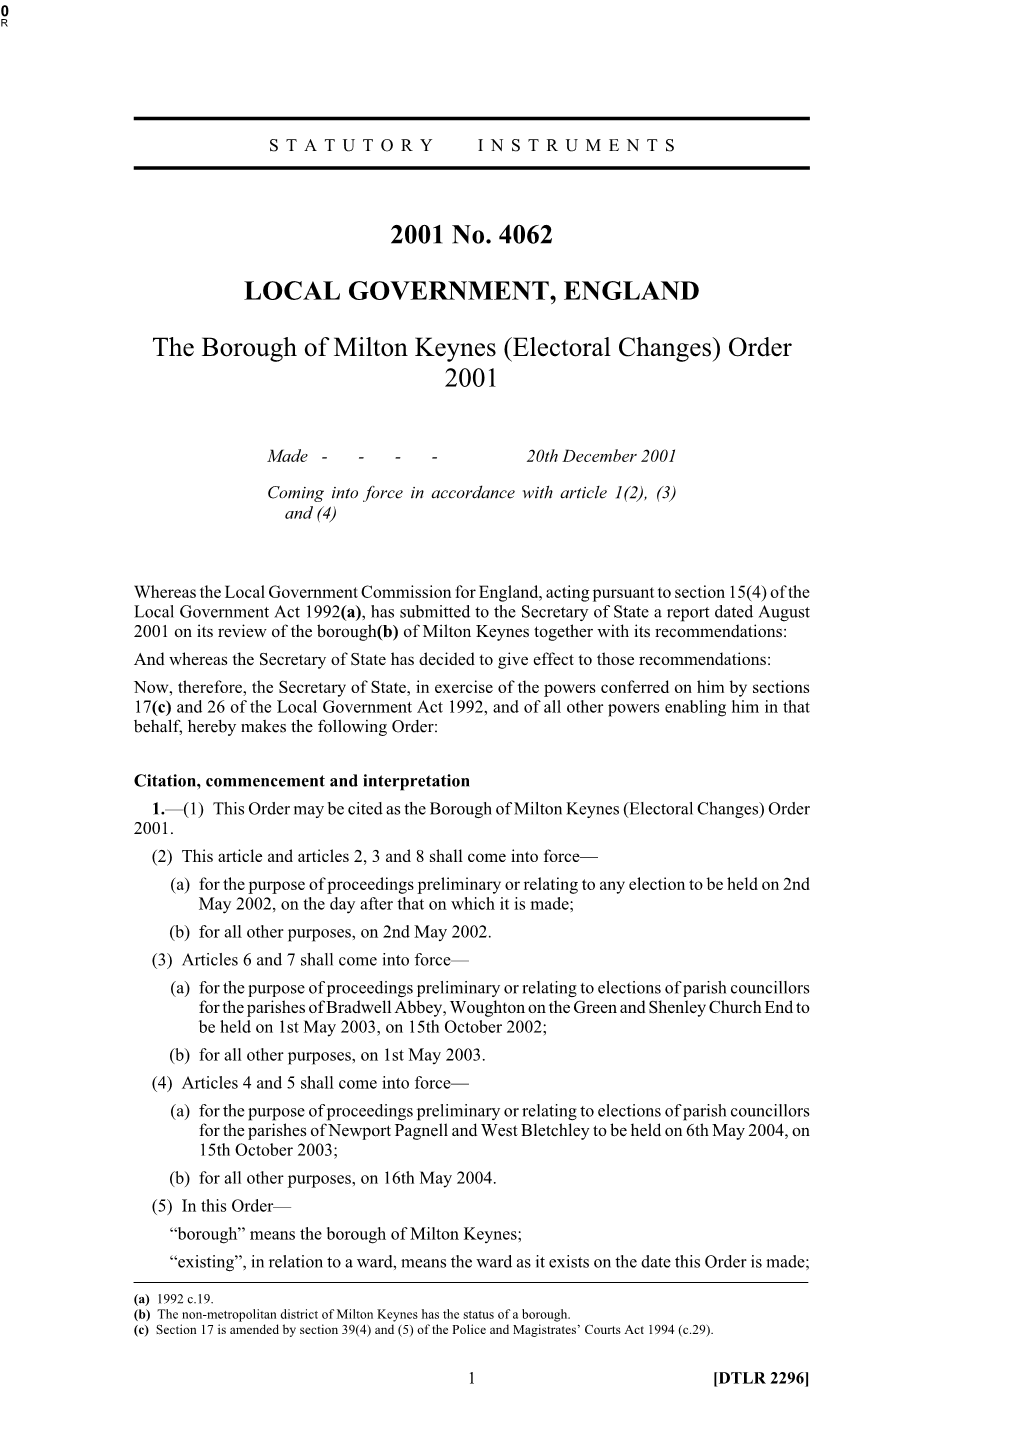 2001 No. 4062 LOCAL GOVERNMENT